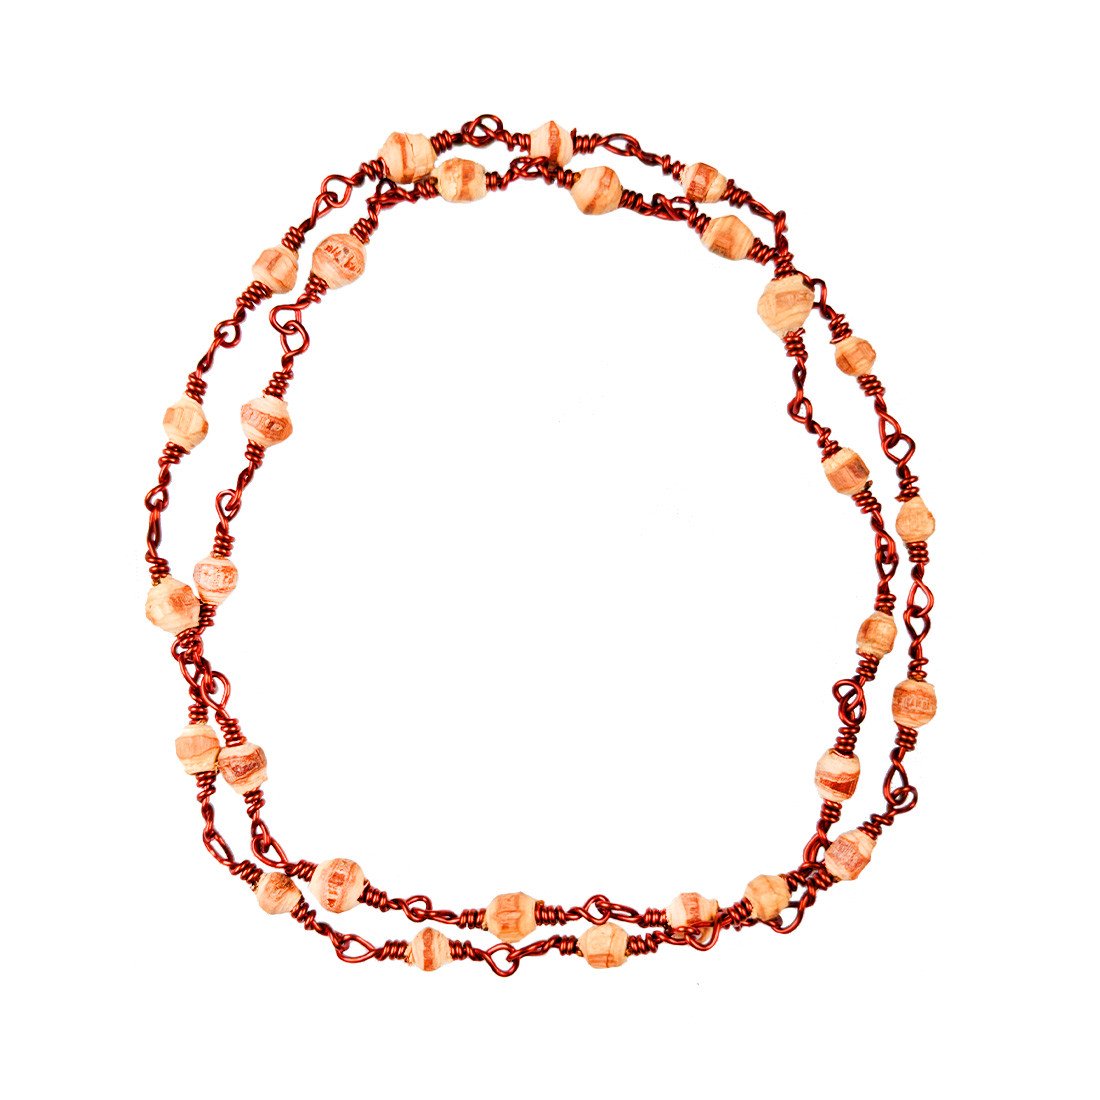 MAYAPURI Tulsi Mala With Strong Copper Thread | Tambra Tulasi Mala (24 inches)